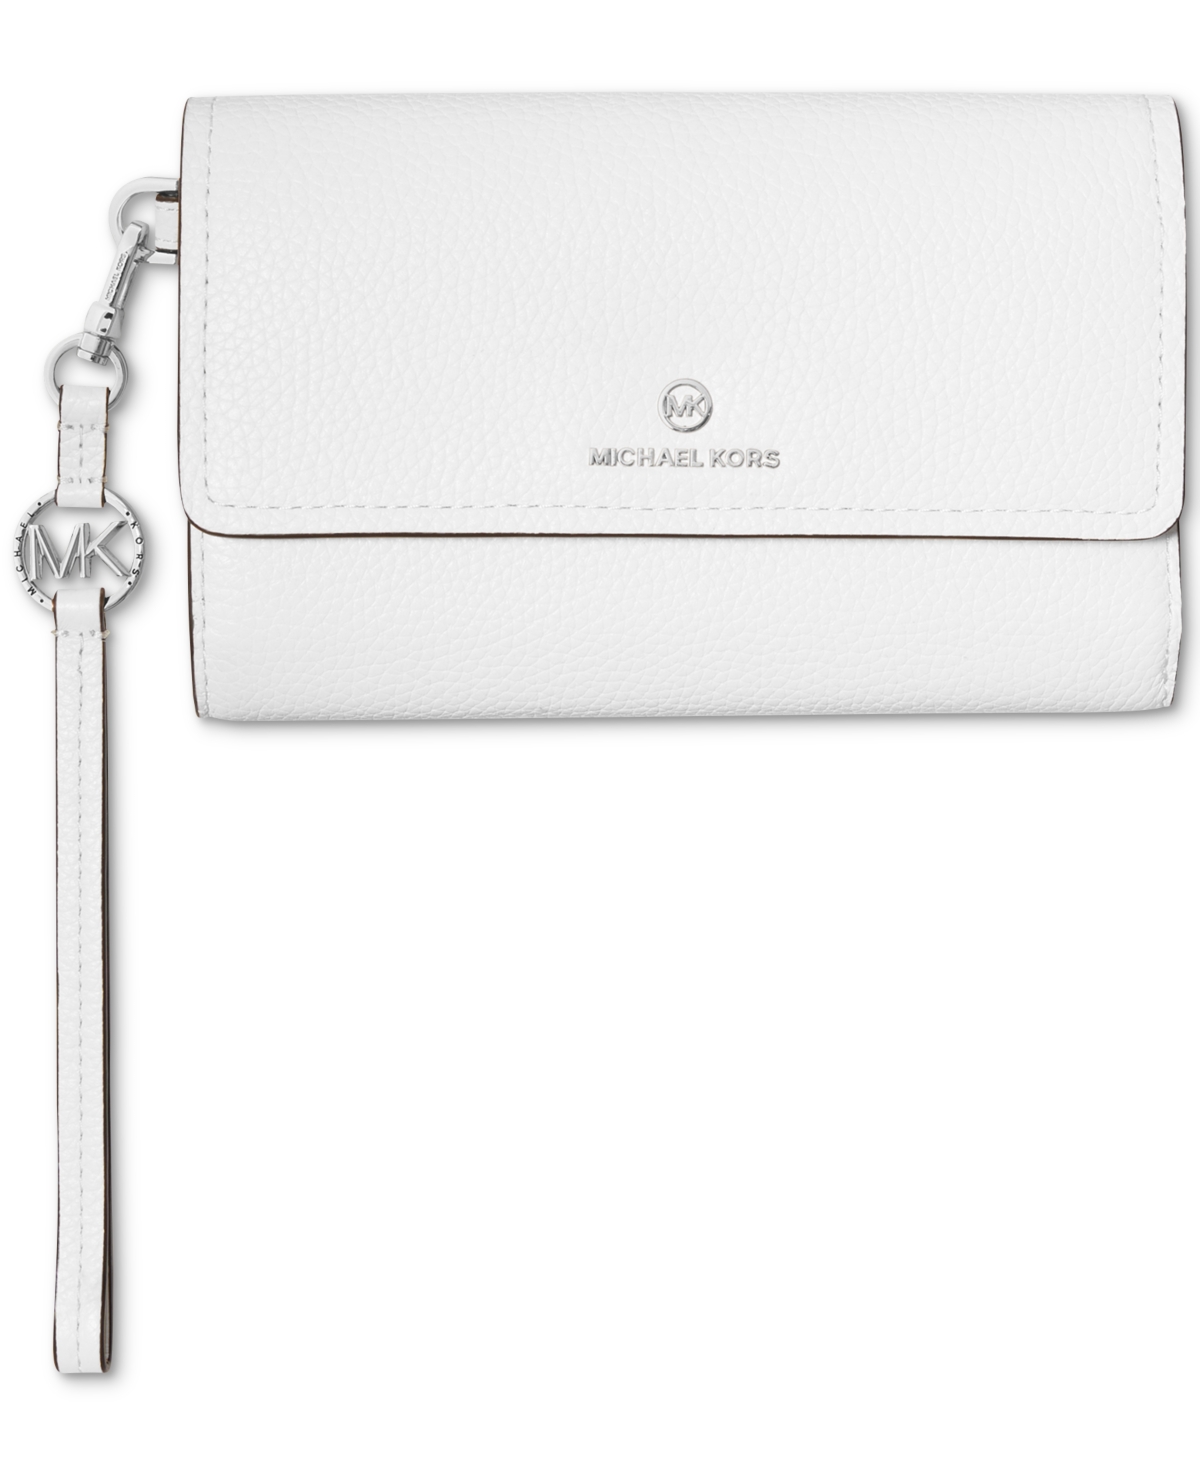 Michael Kors Jet Set Charm Large Flap Phone Wristlet Optic White One Size :  Cell Phones & Accessories 